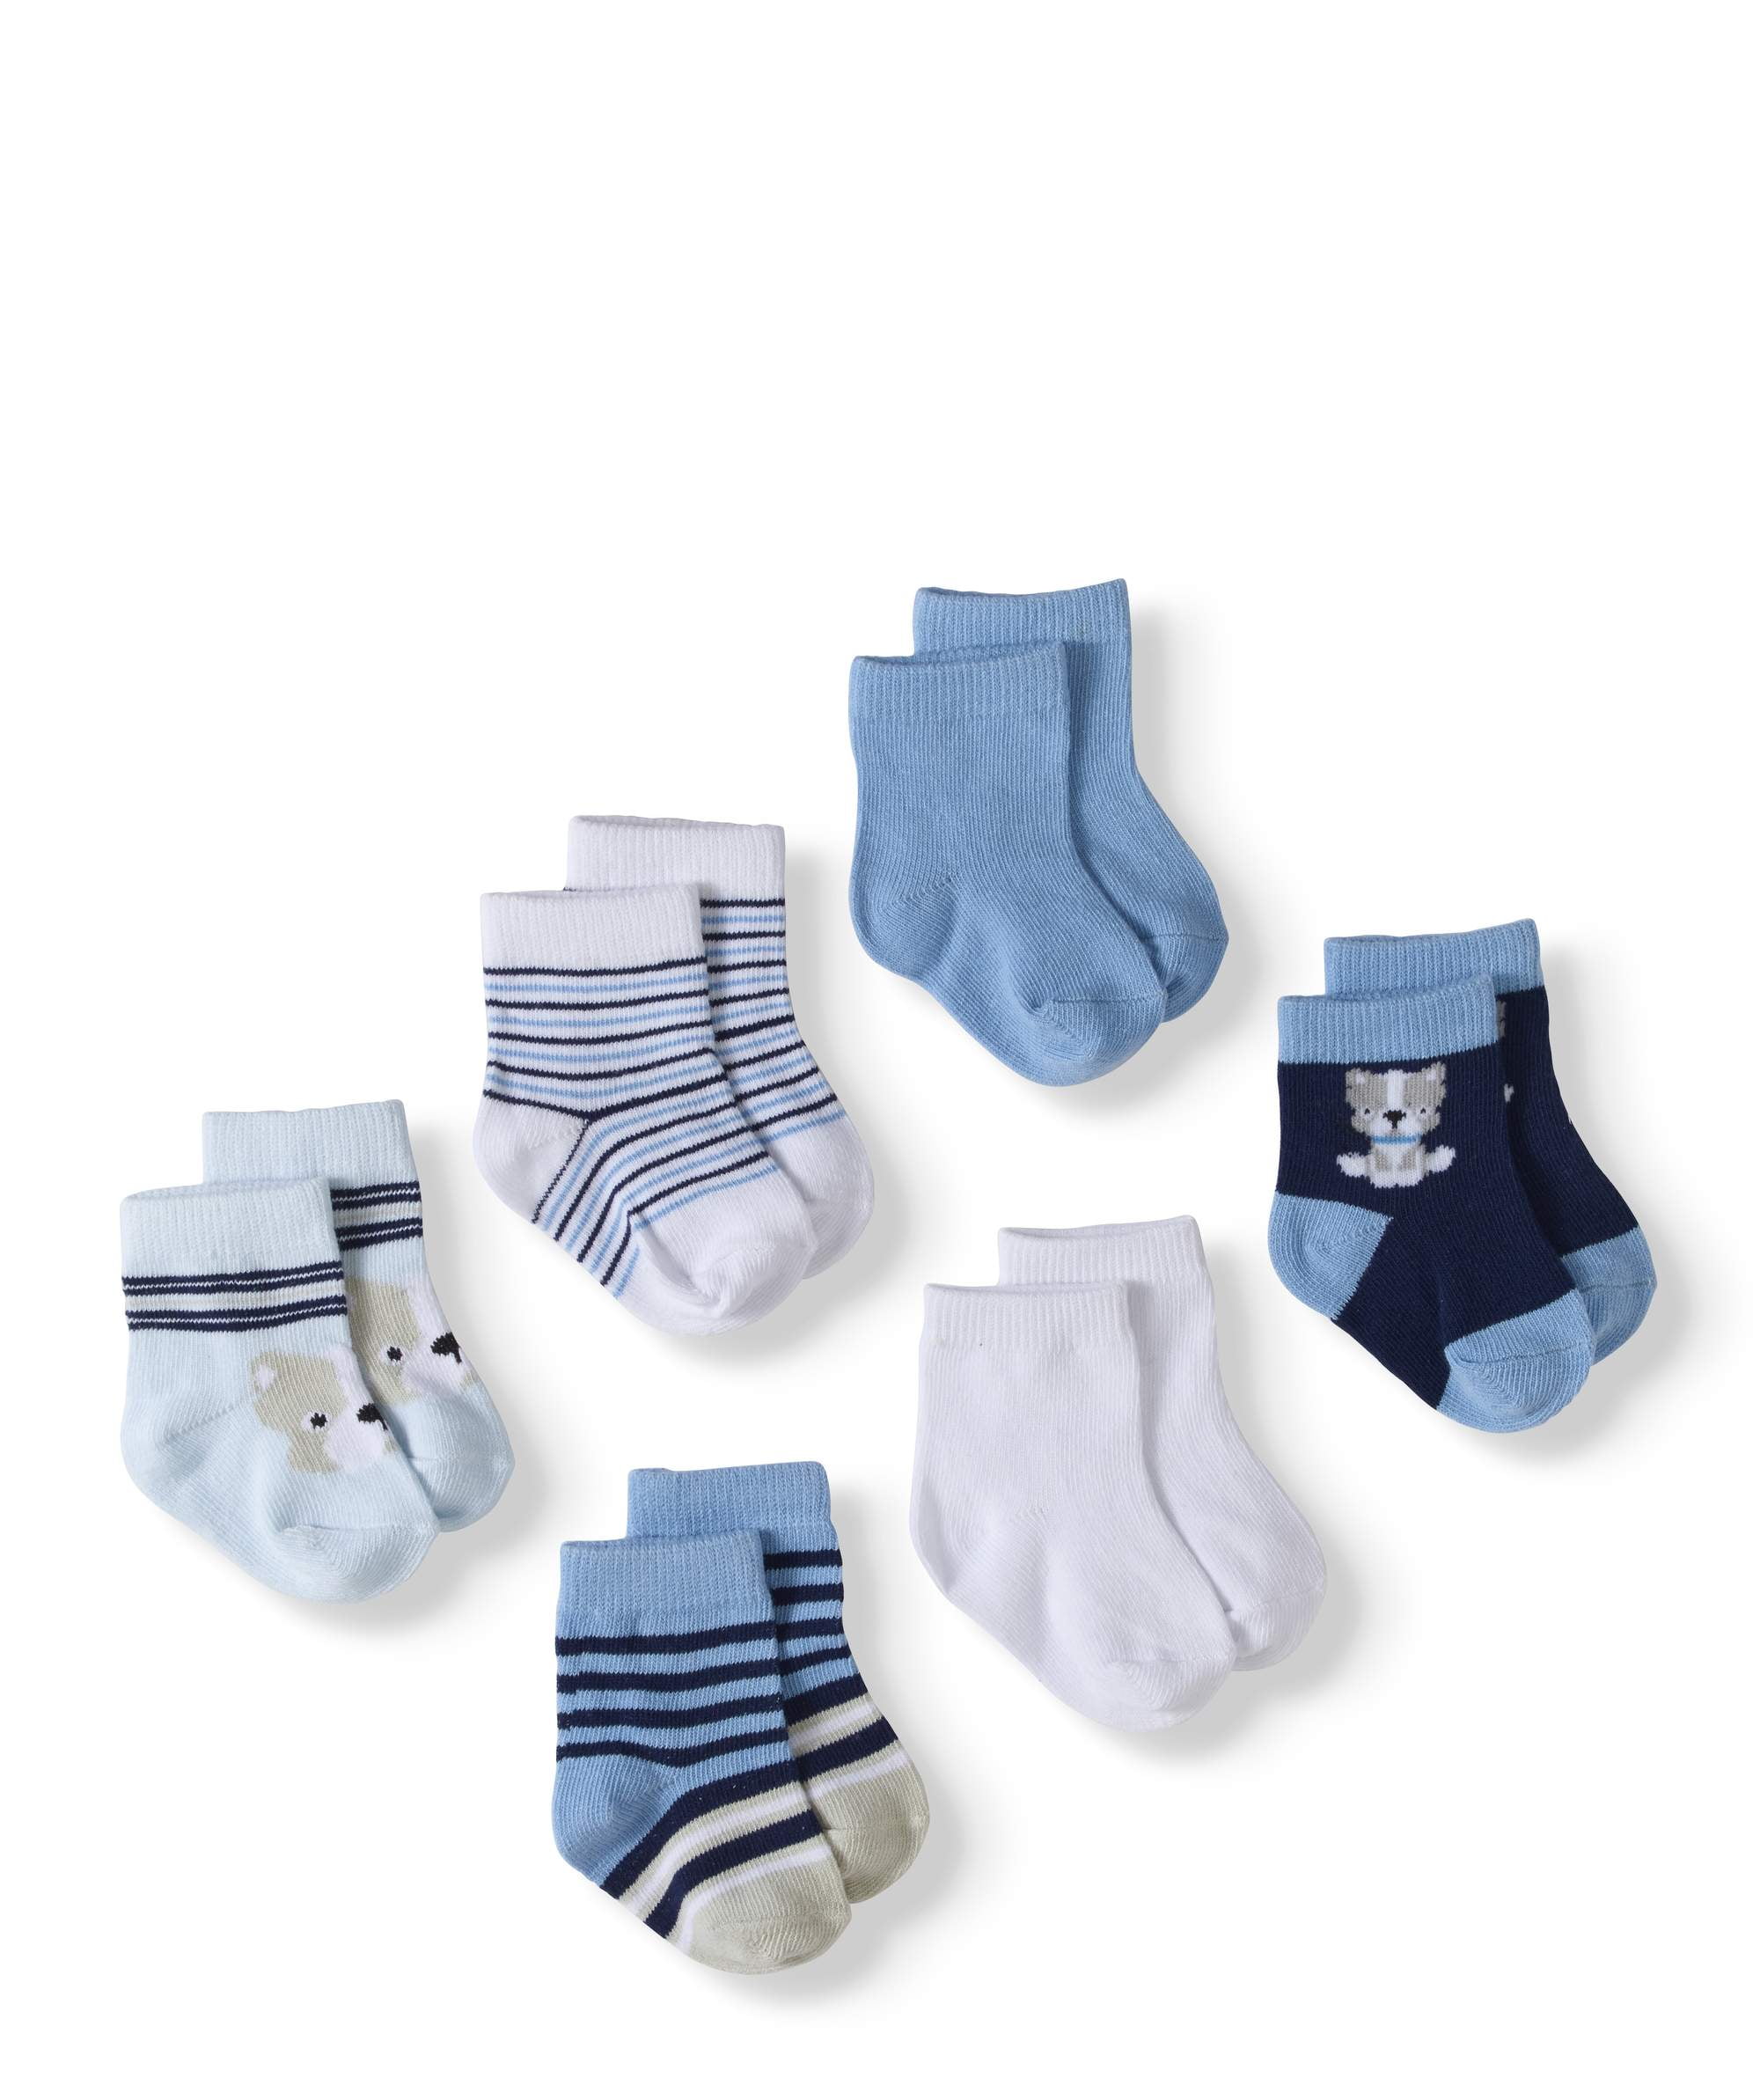 Rene Rofe - Rene Rofe Assorted Socks, 6-Pack (Baby Boys) - Walmart.com ...